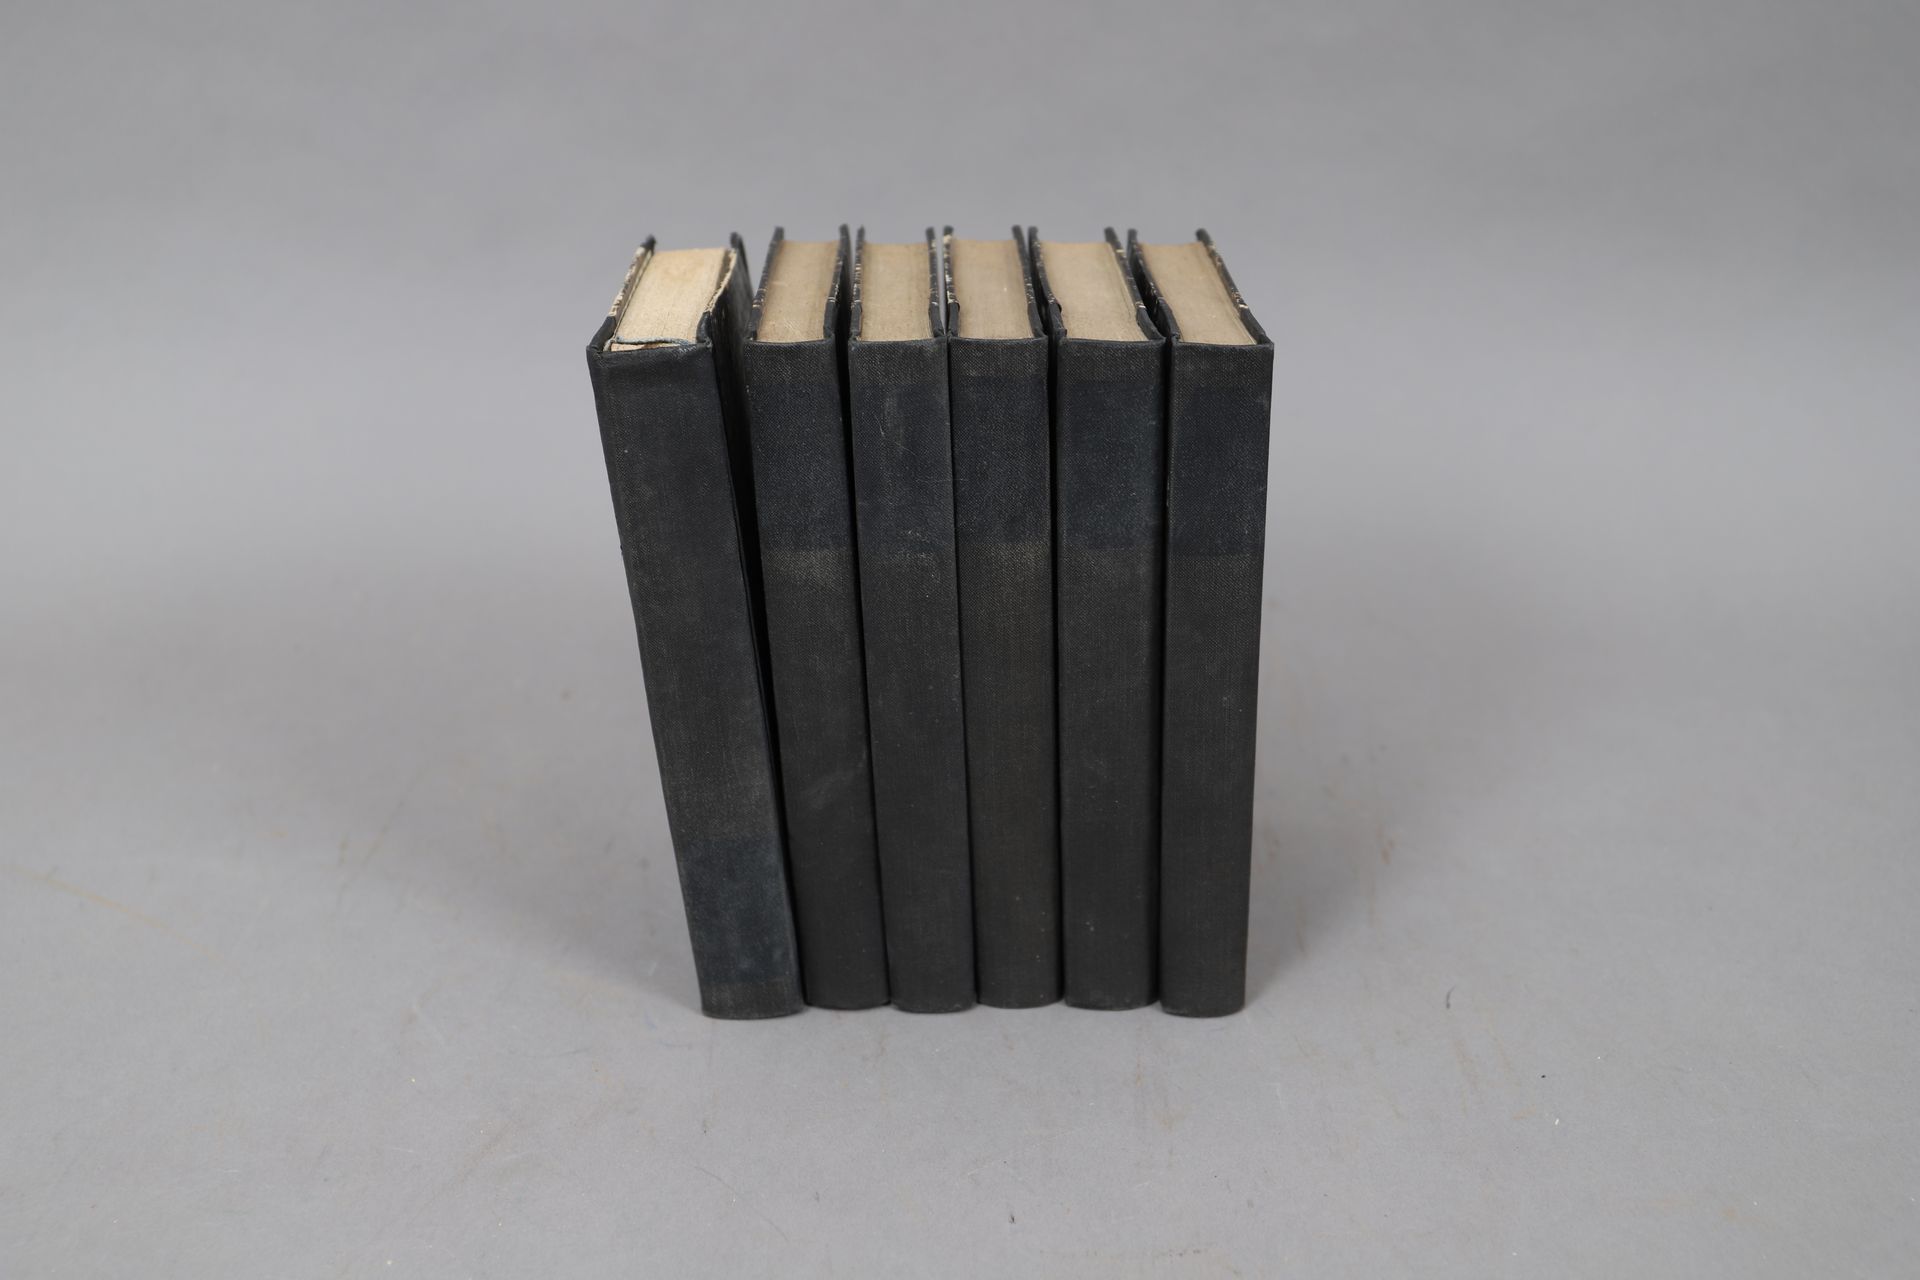 Null ŒUVRES de BOSSUET

Bruselles 1818,

6 volumes reliés.